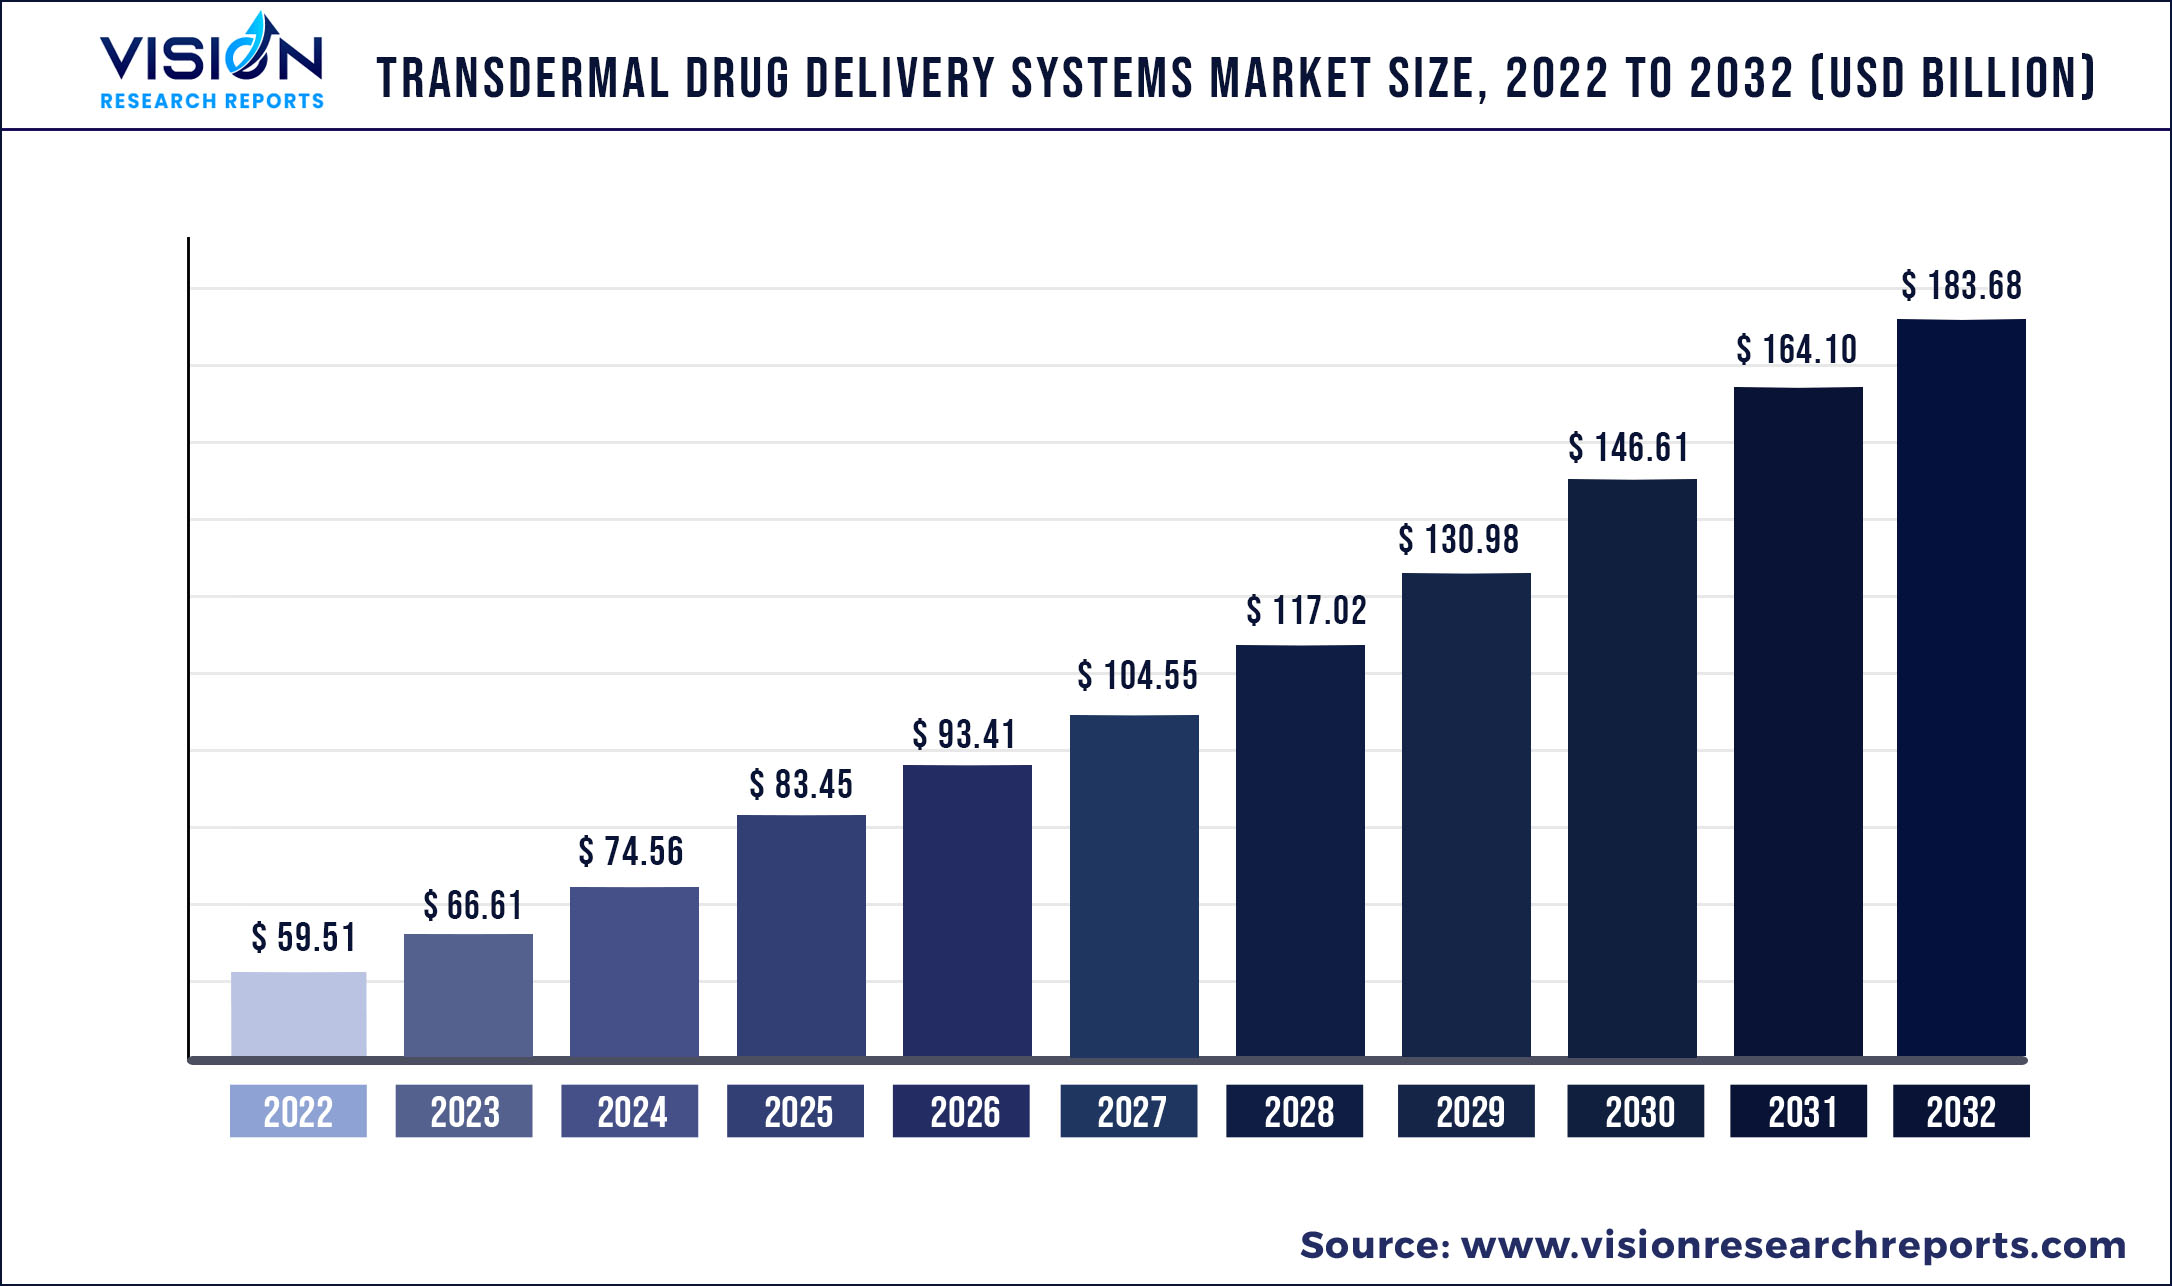 Transdermal Drug Delivery Systems Market Size 2022 to 2032